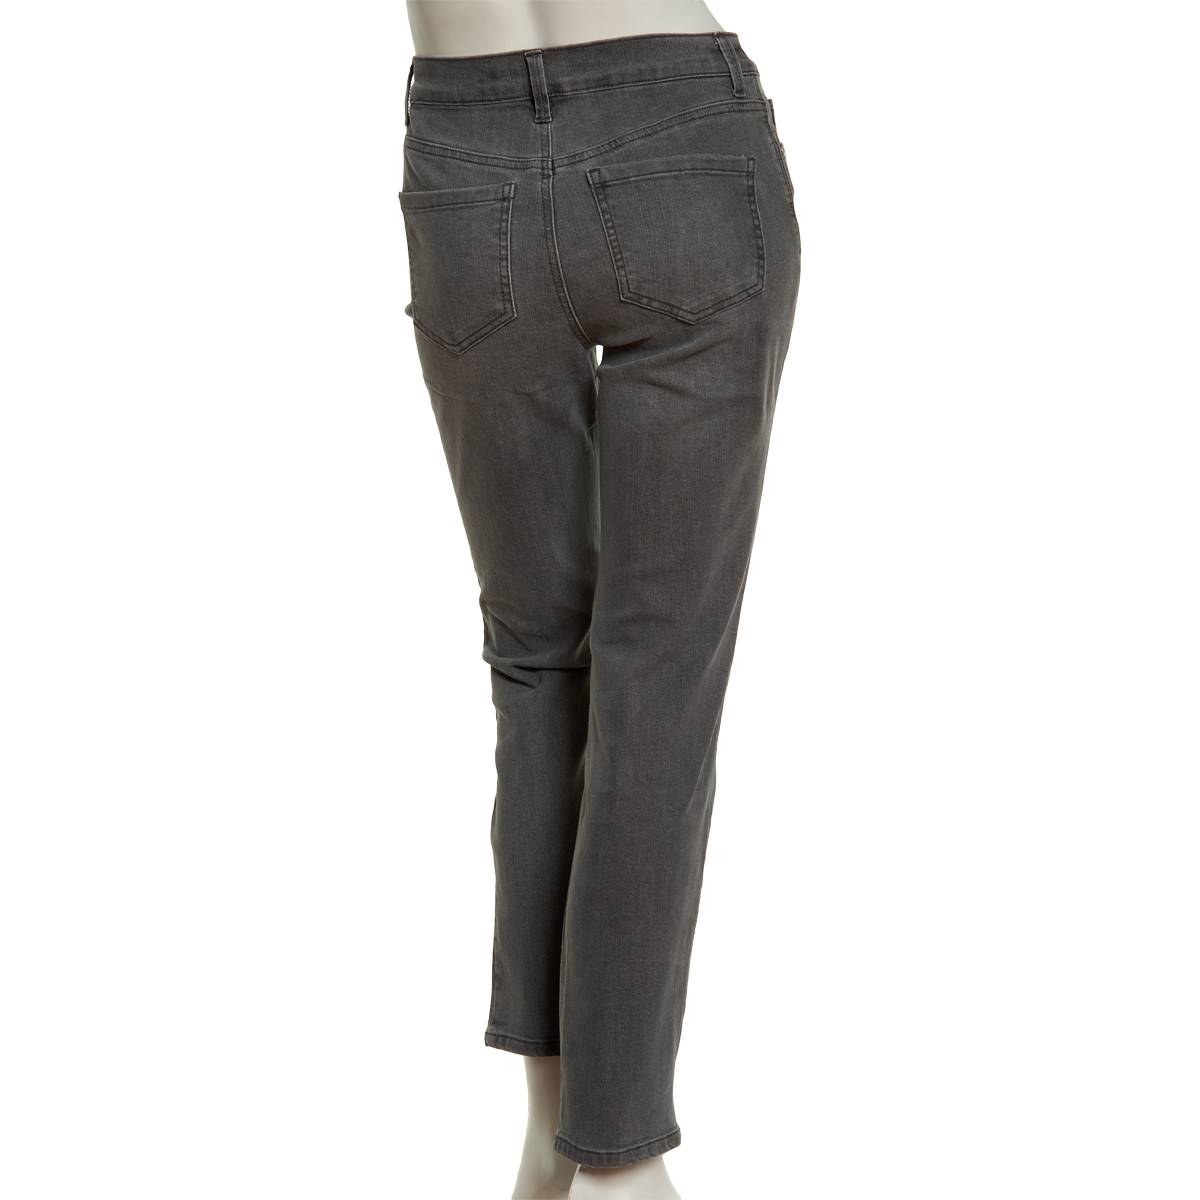 Petite Gloria Vanderbilt Amanda Skinny Jeans